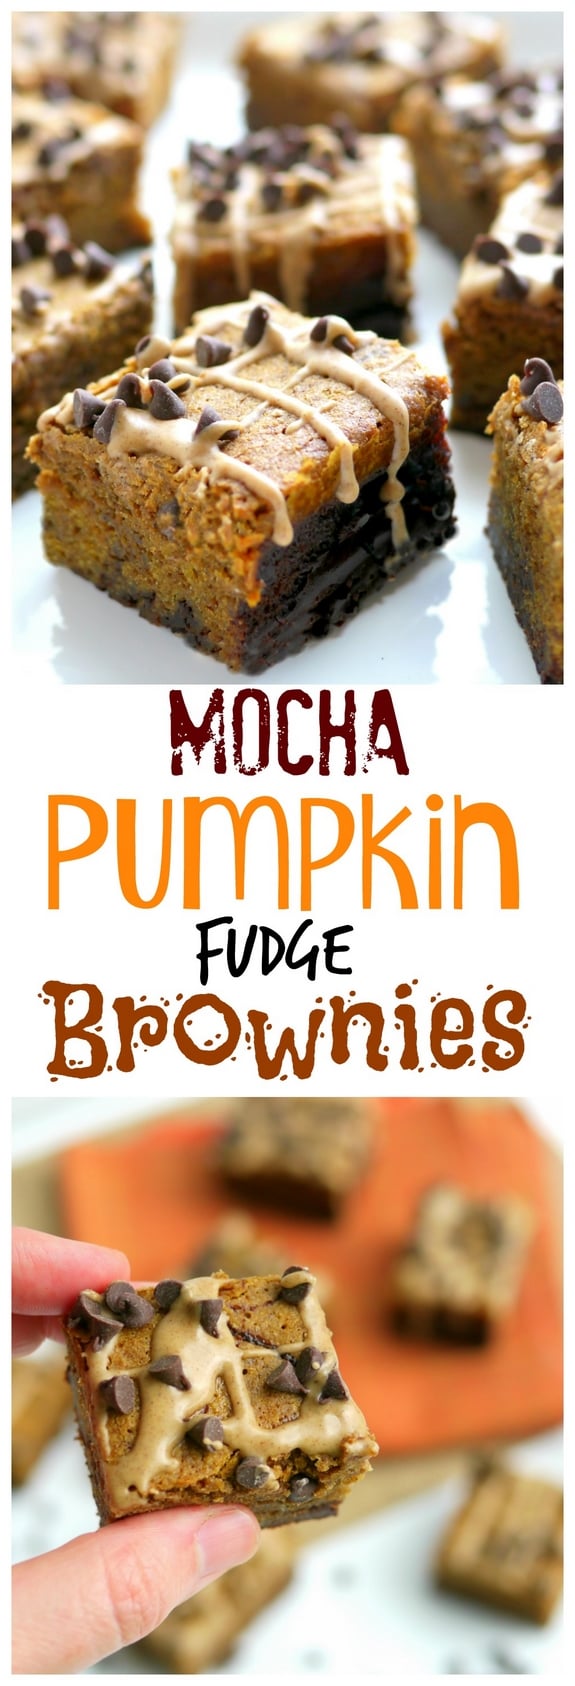 Mocha Pumpkin Fudge Brownies